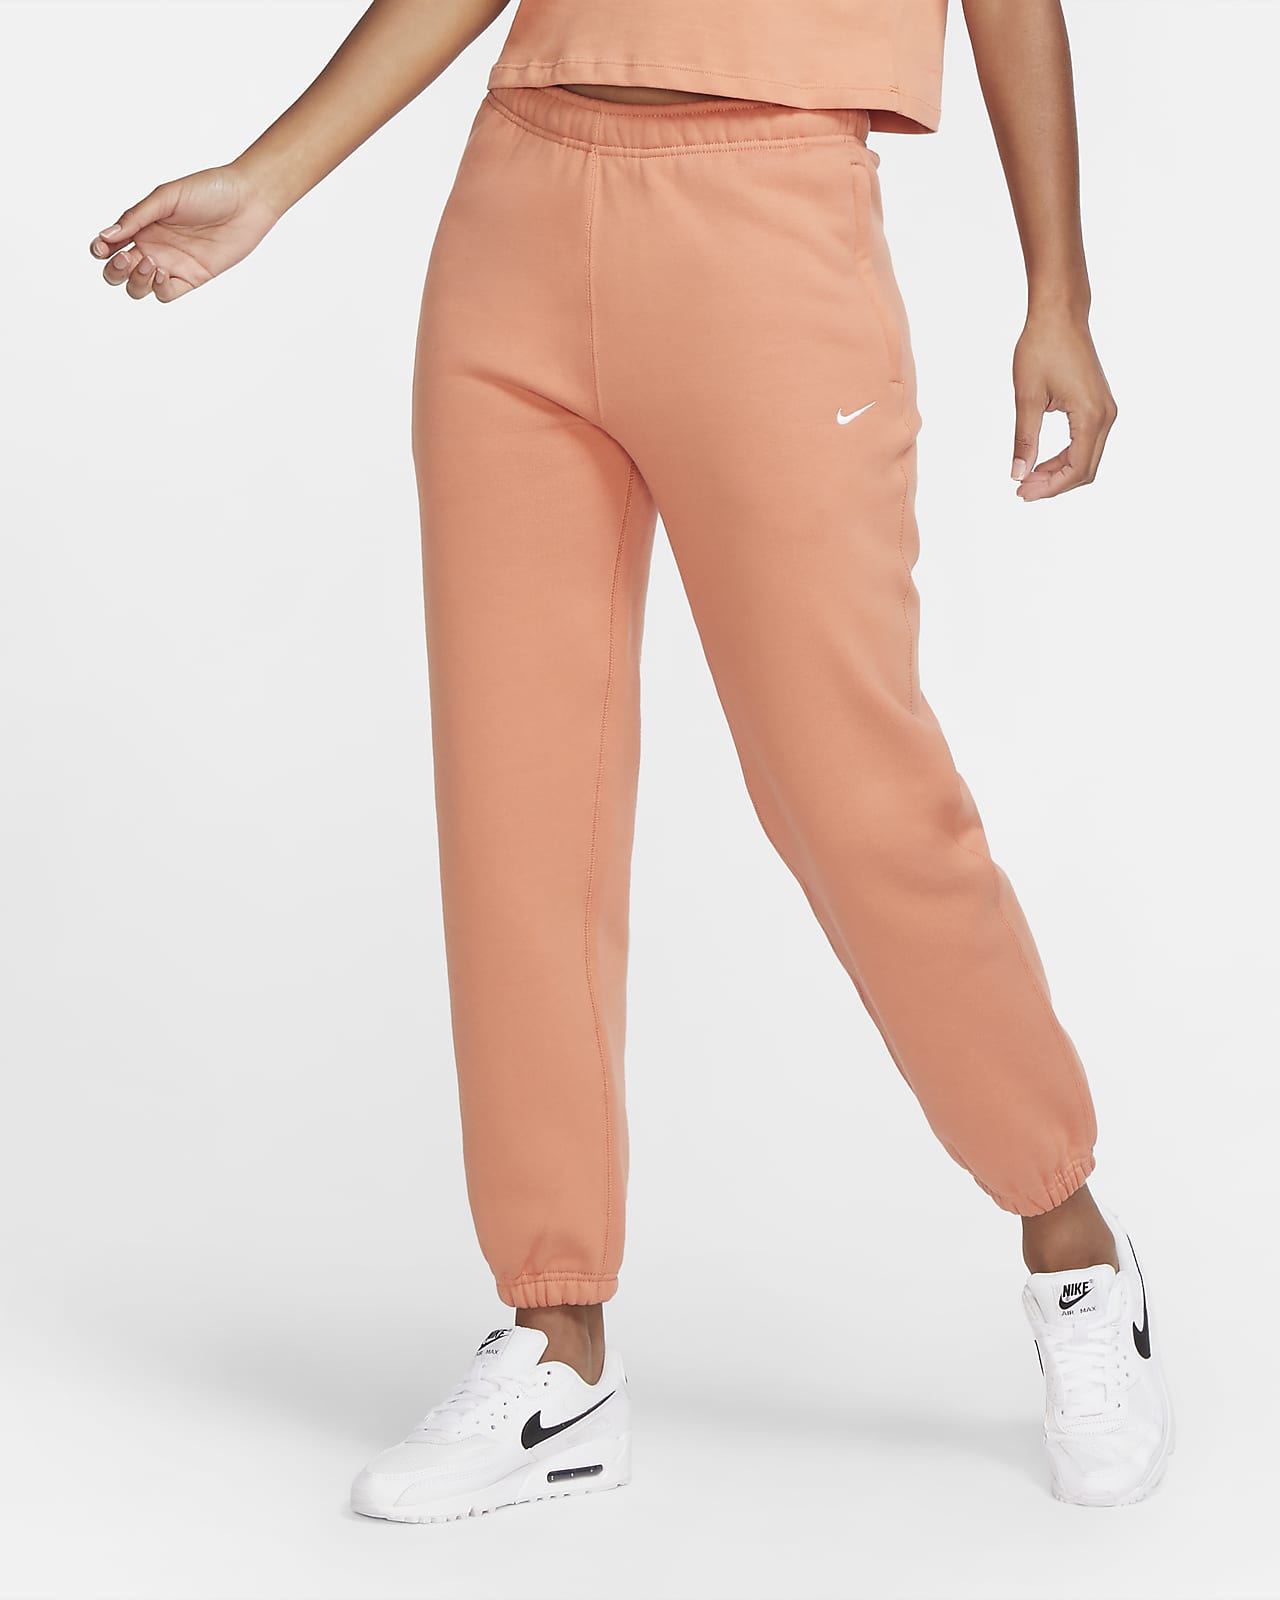 NikeLab Women's Fleece Pants. Nike JP